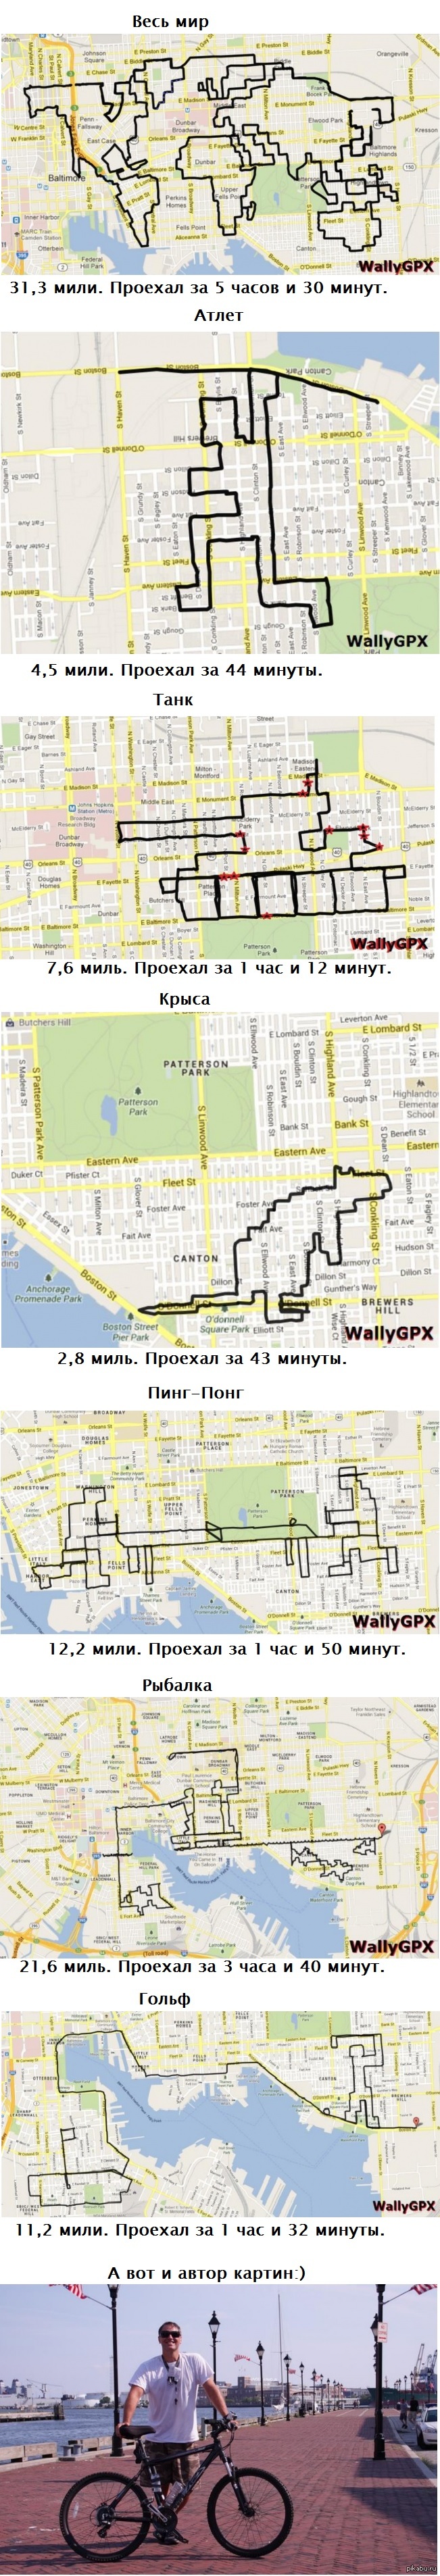        (Michael Wallace)        GPS-.